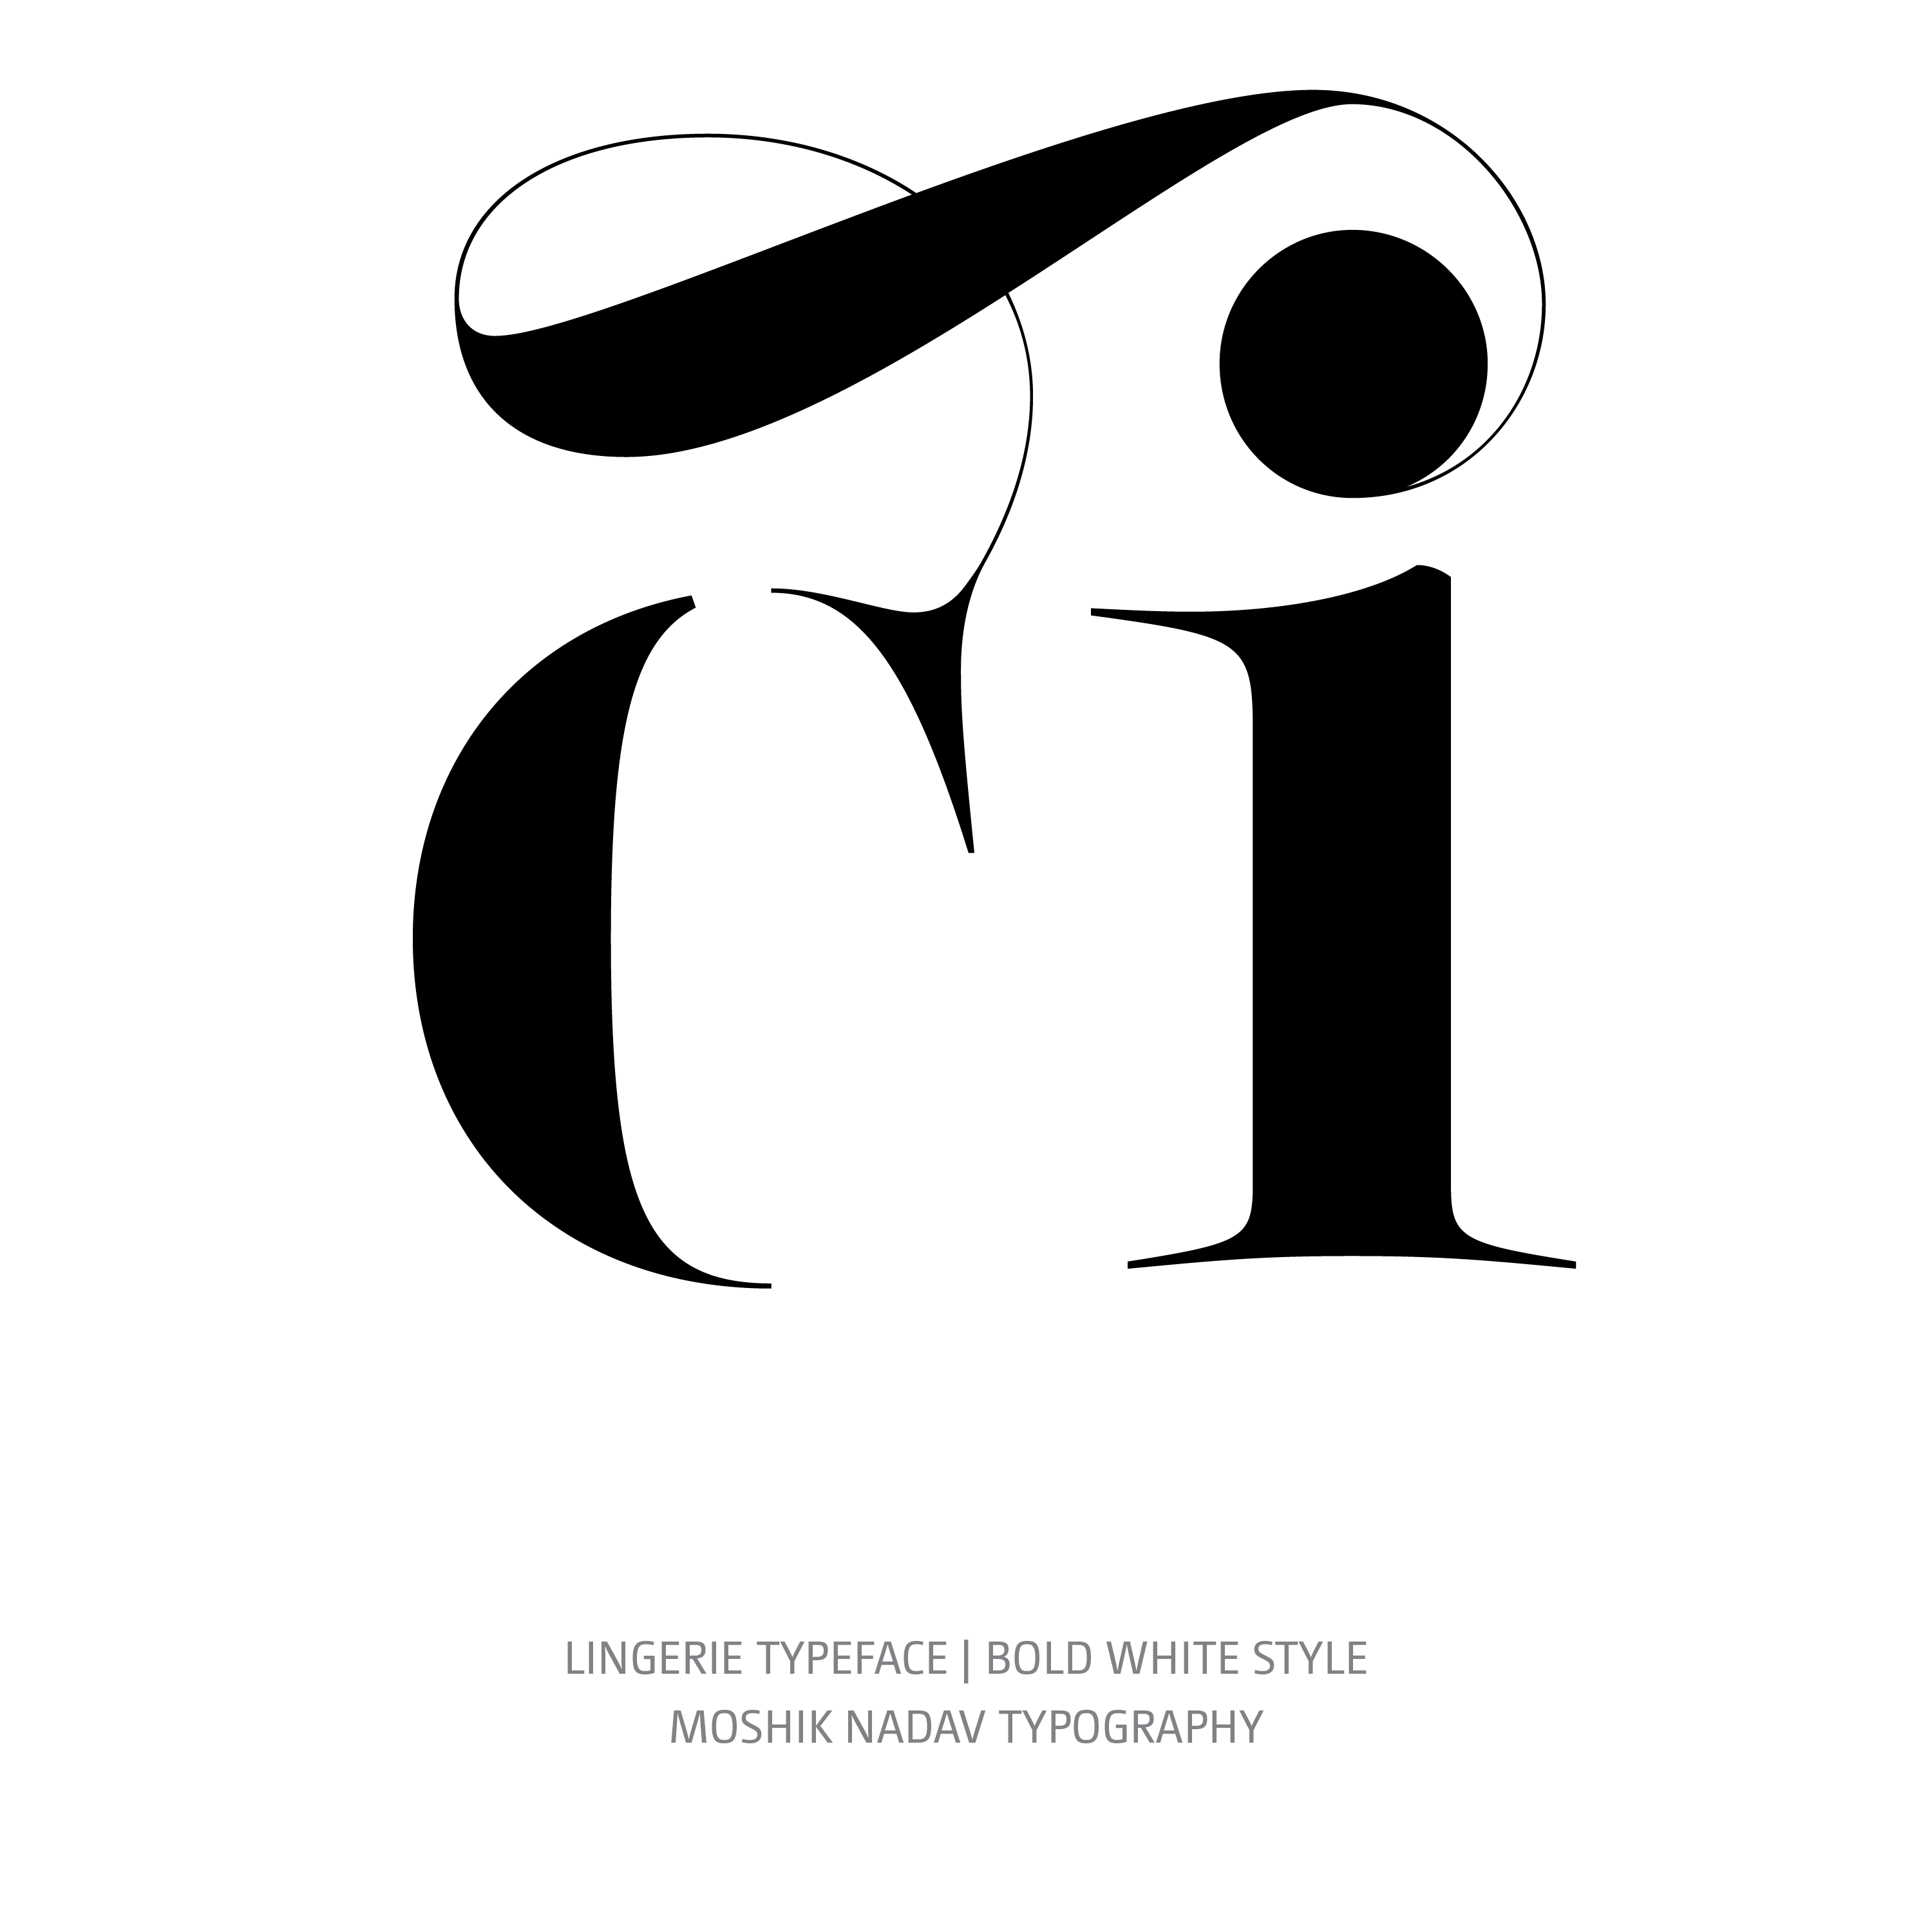 Lingerie Typeface Bold White glyph